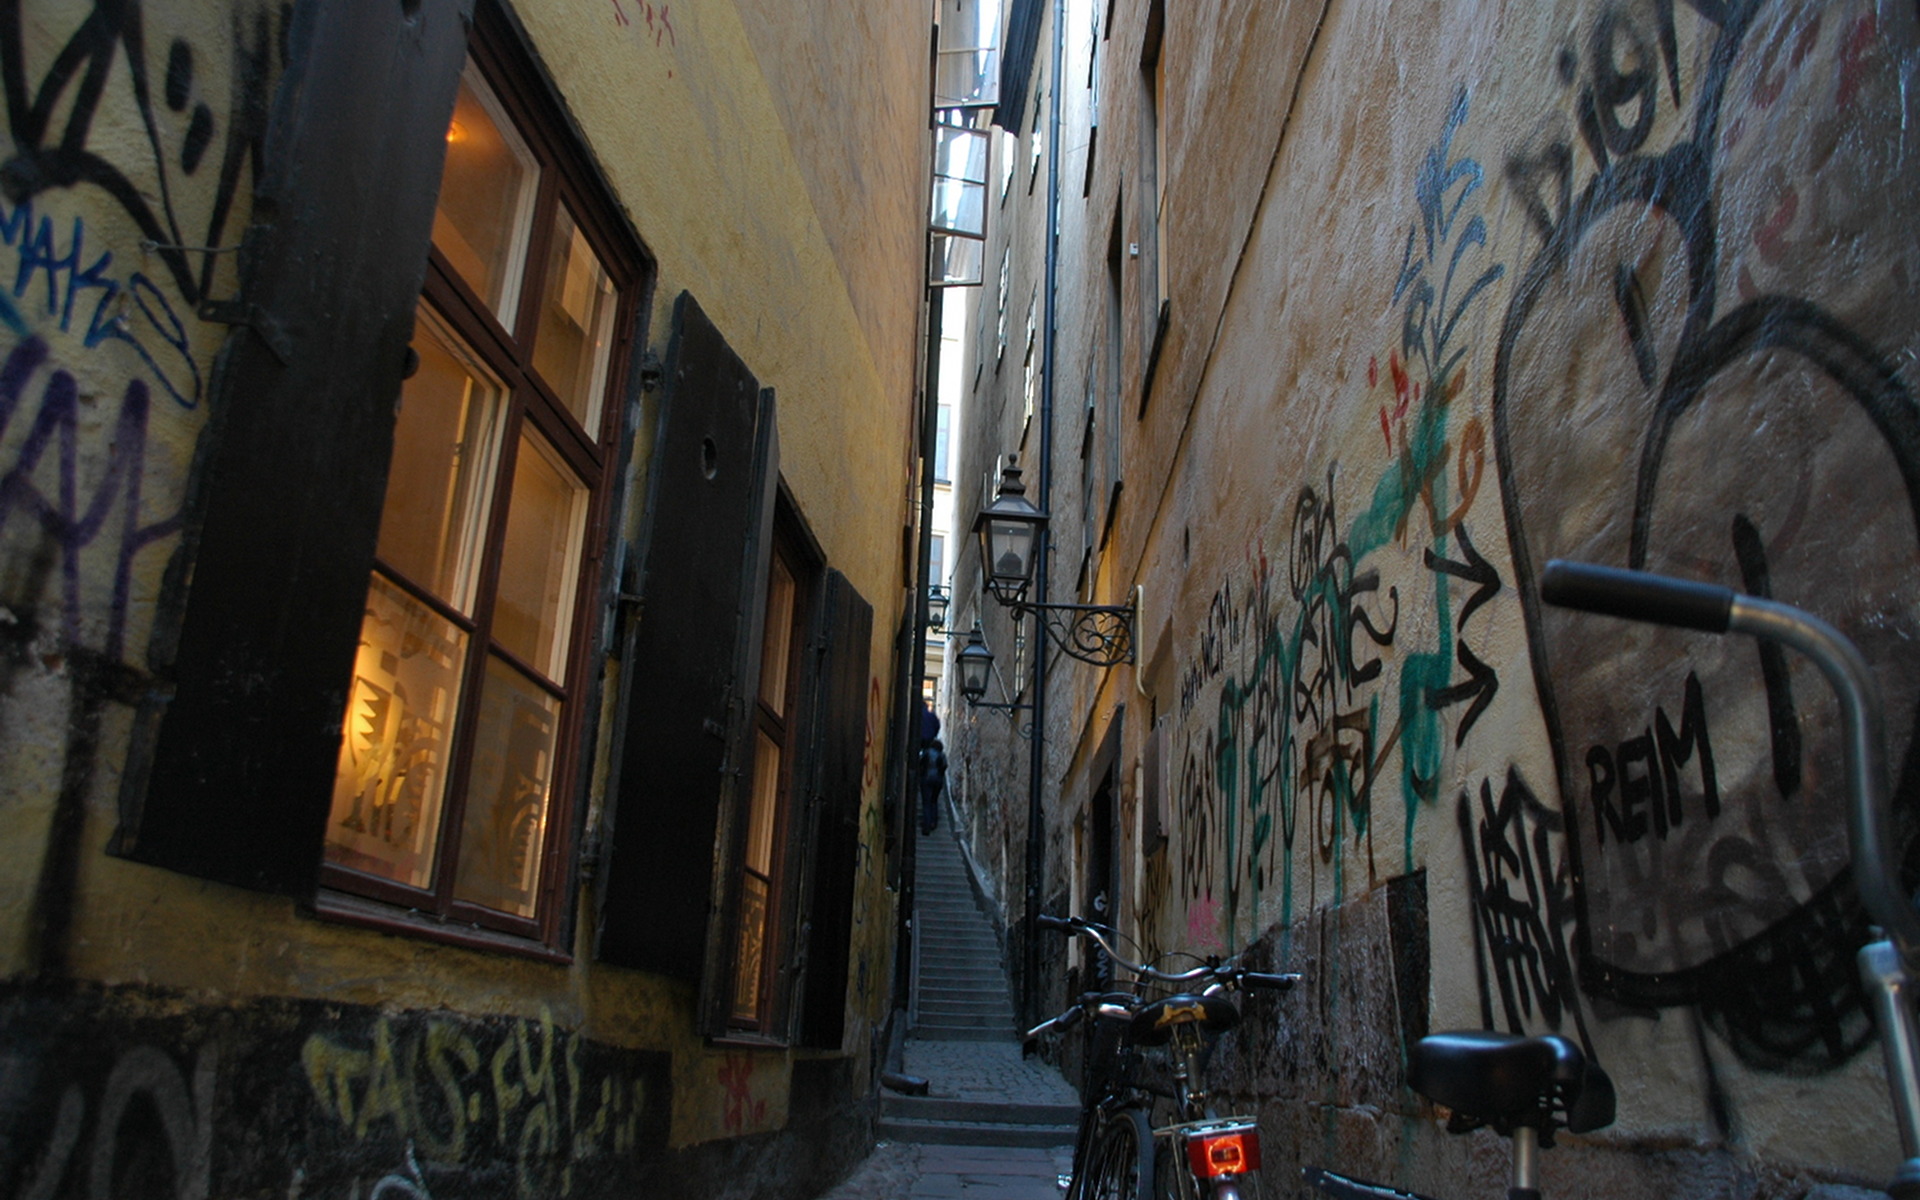 paint, artistic, graffiti, alley, city, urban